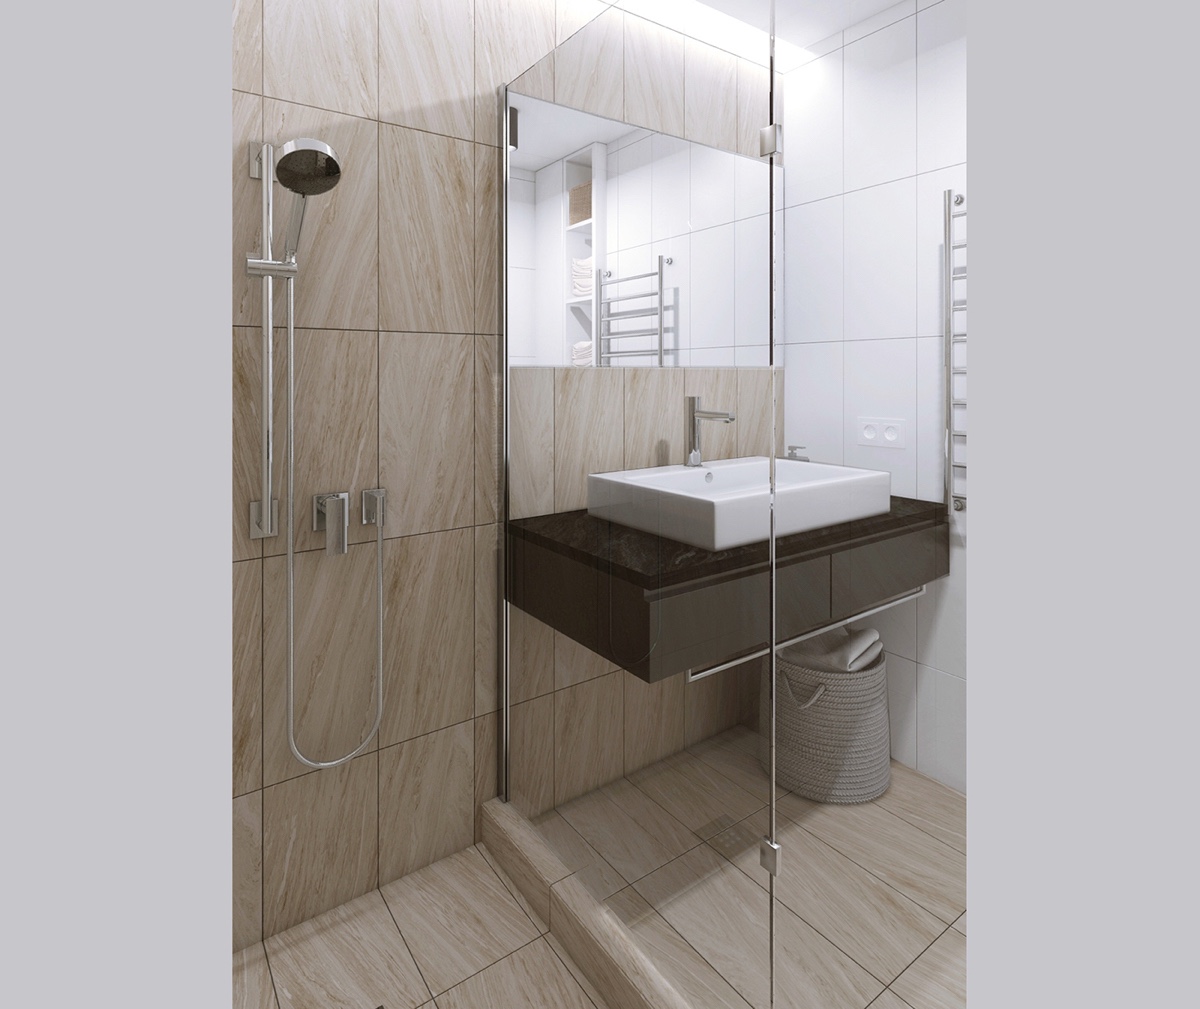 bathroom-tile-with-wood-grain-texture